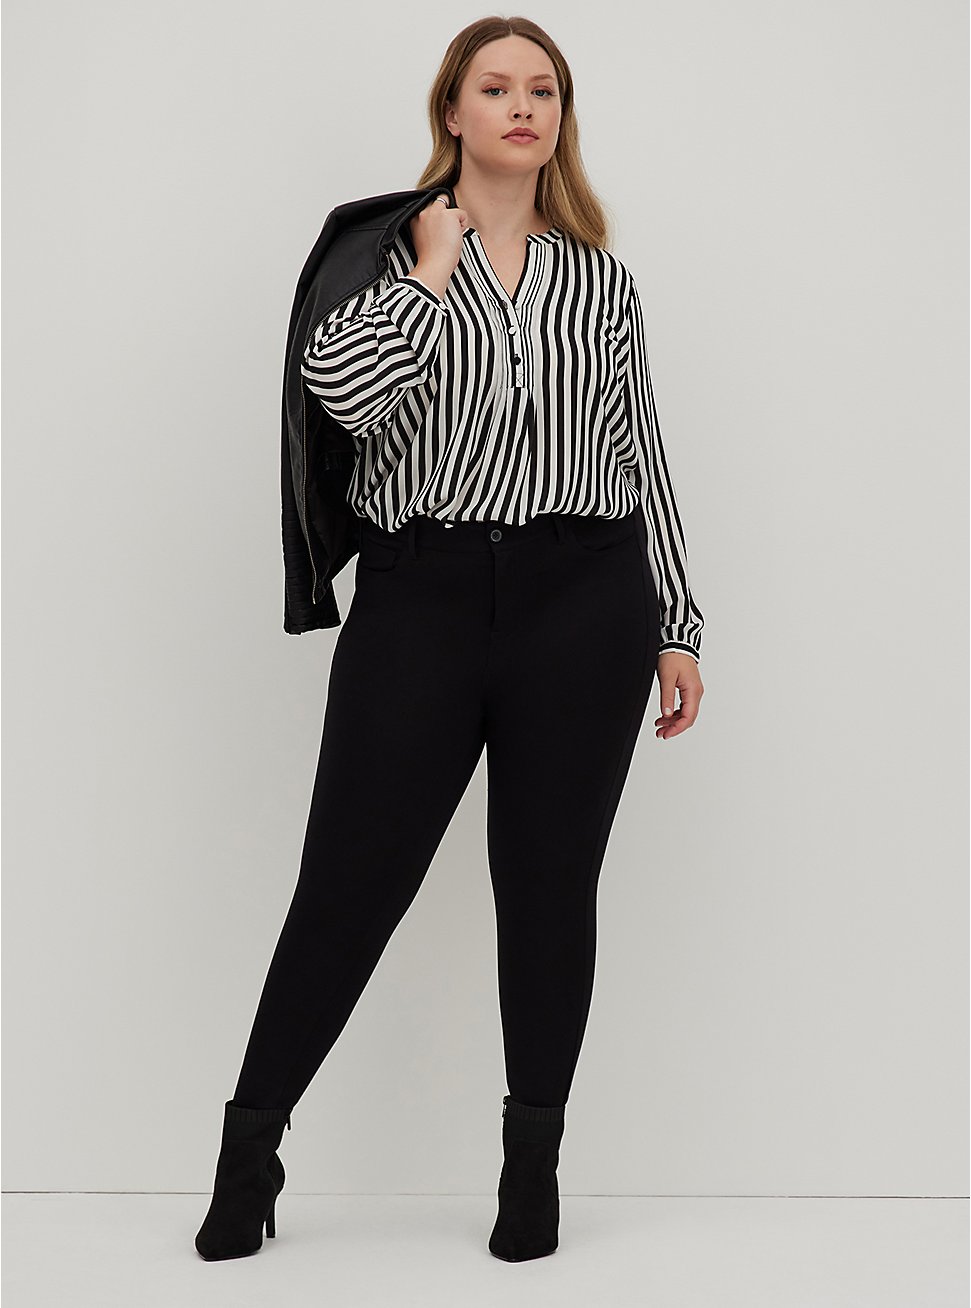 Pintuck Blouse - Georgette Black & White Stripe, STRIPE - WHITE, hi-res